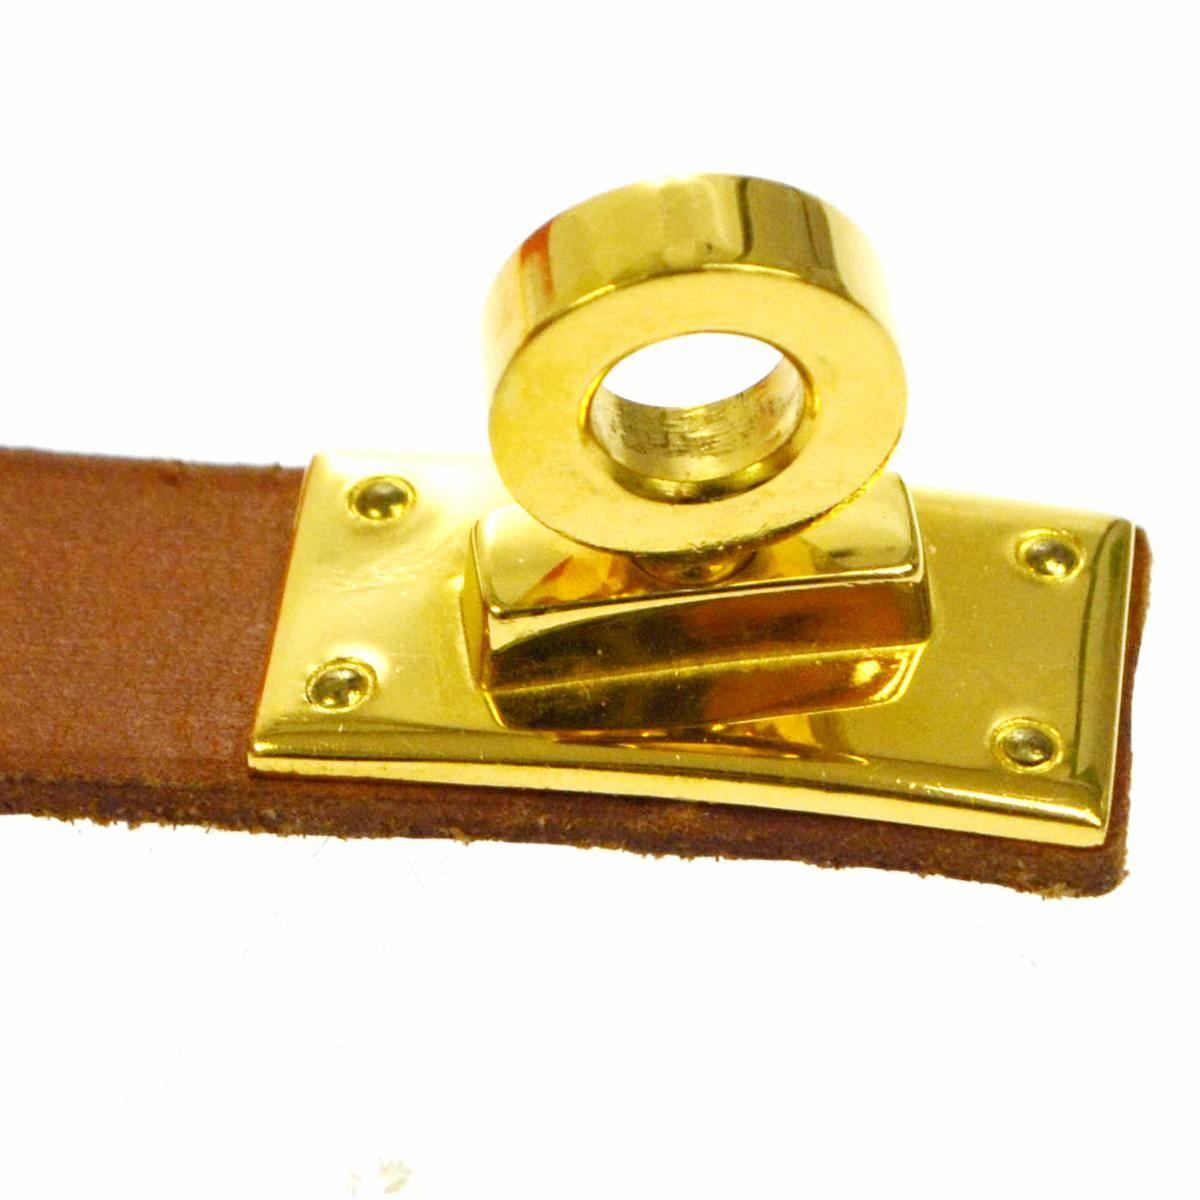 Leather
Metal
Gold tone
Twist lock closure
Width 0.75"
Inner circumference ~6.5"
Includes original Hermes box